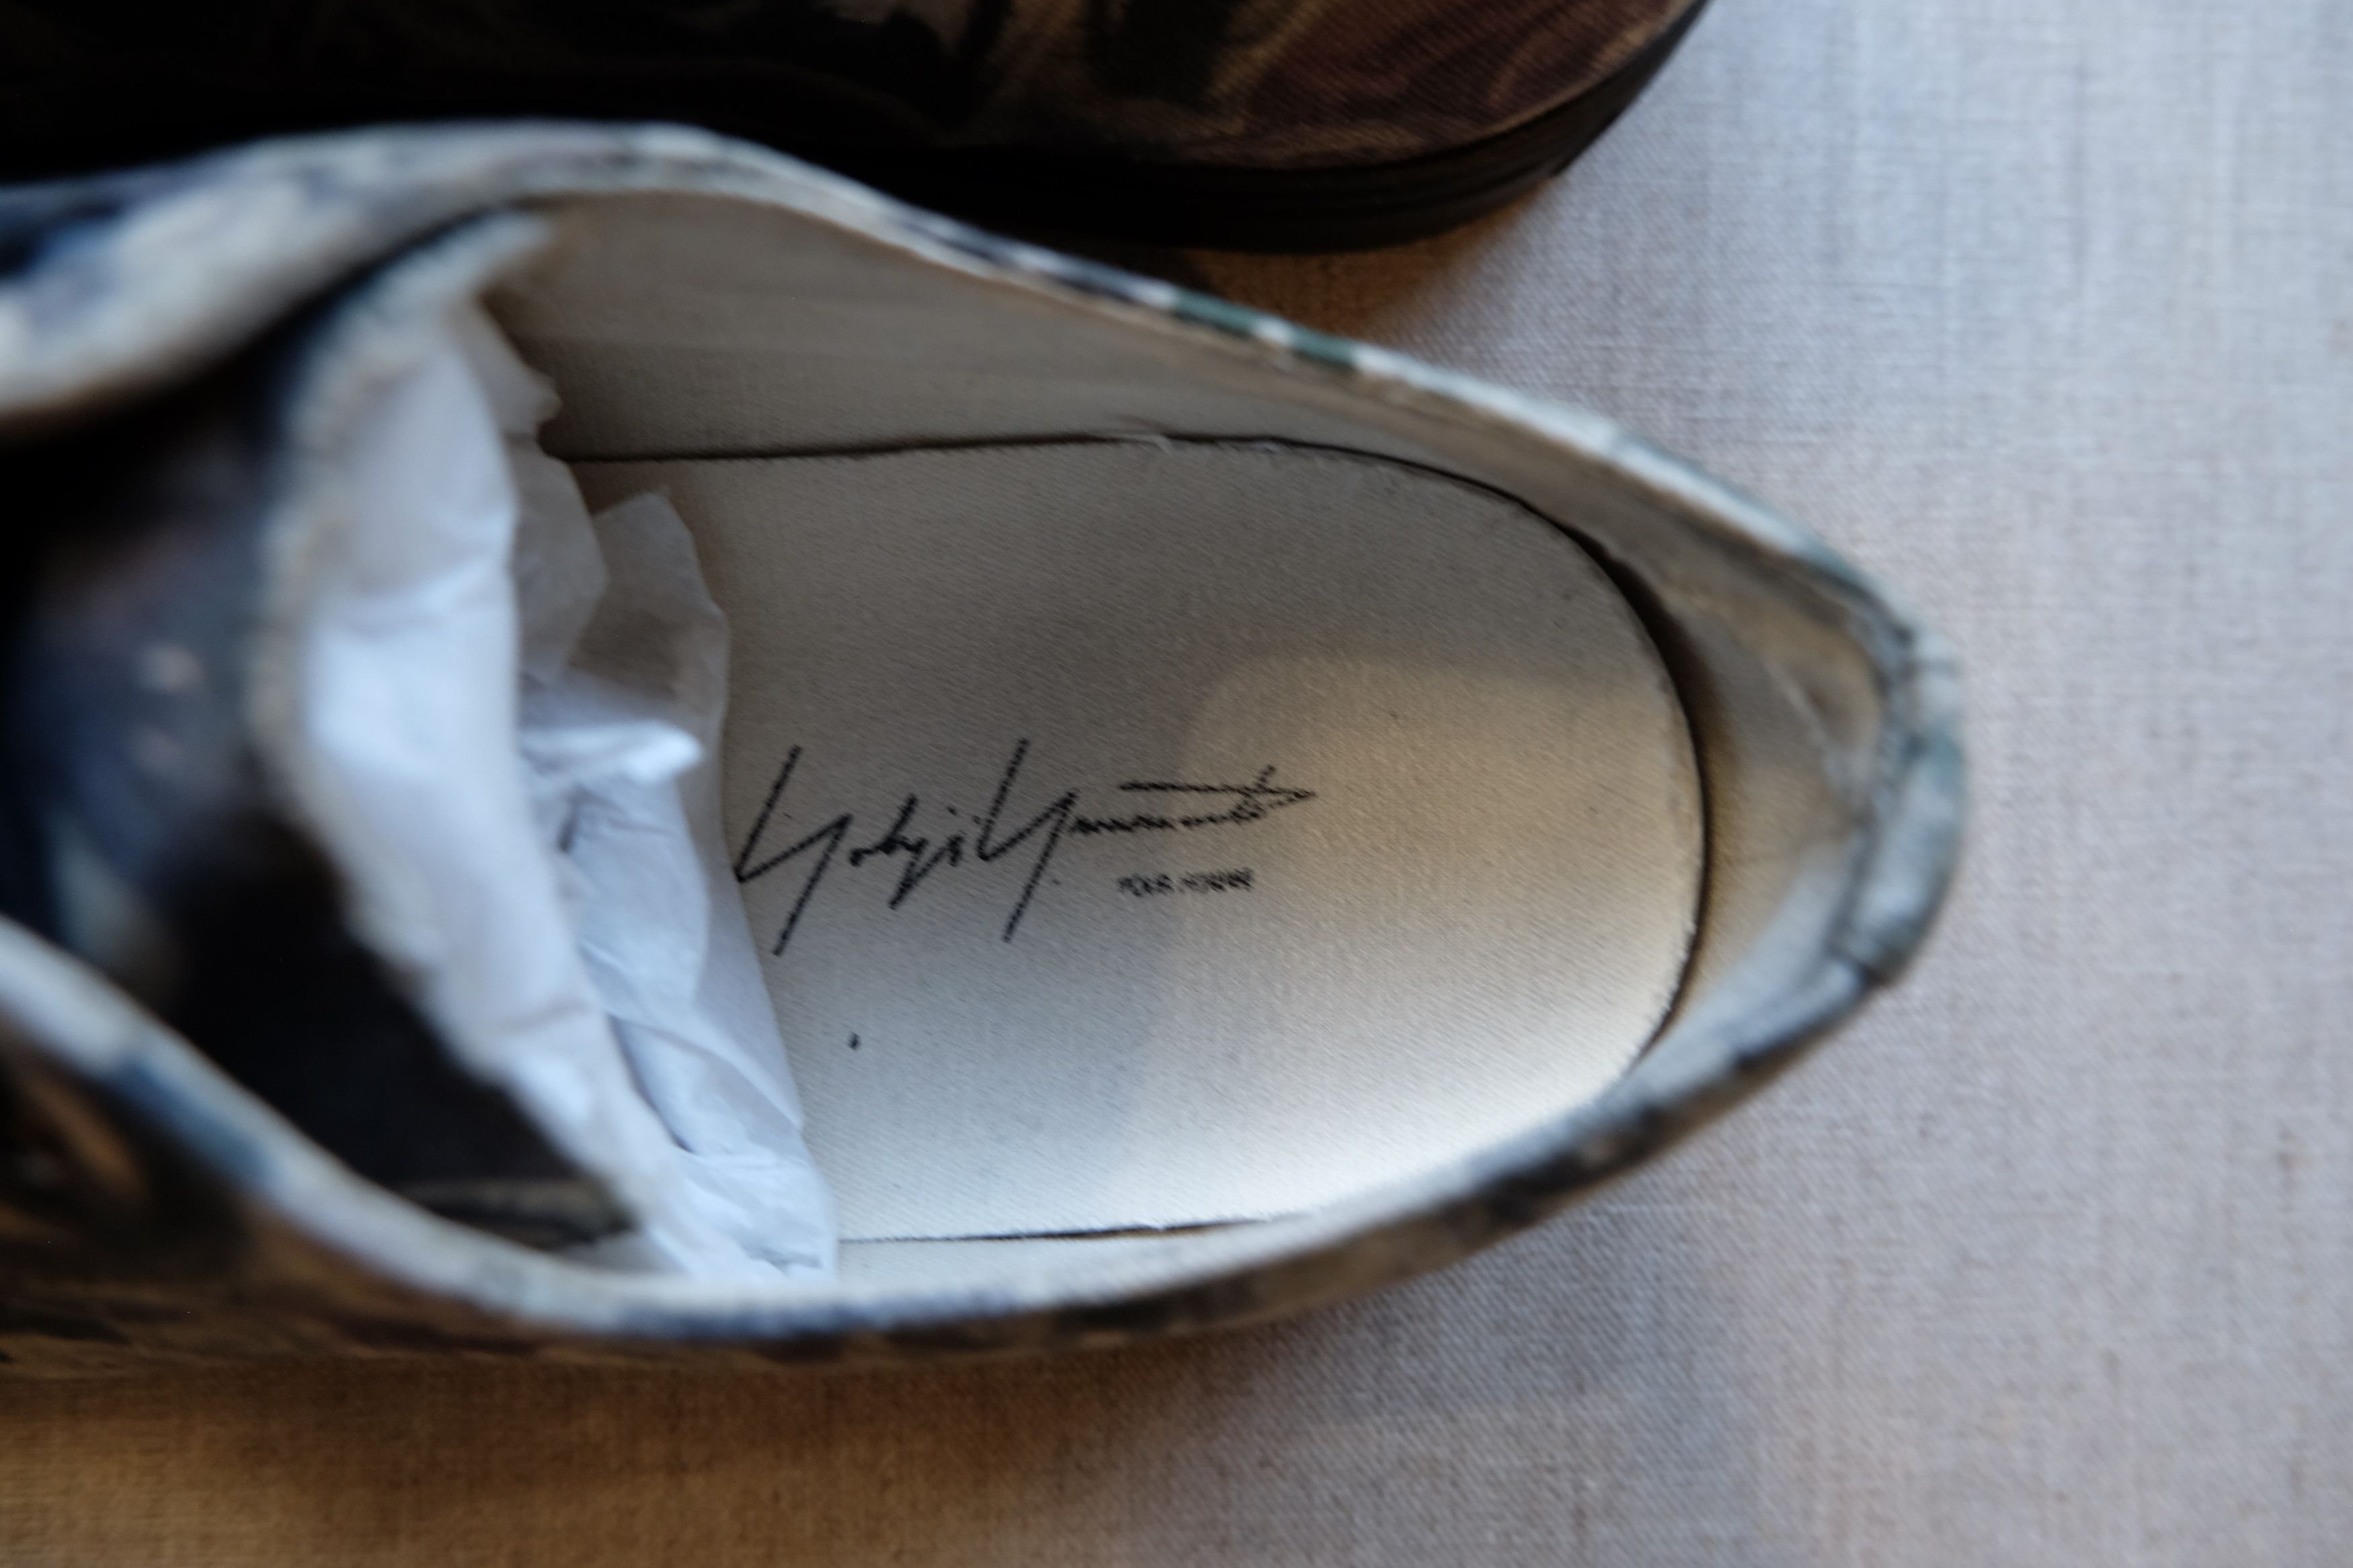 YYPH SS2021 Eye Shoes (JP 4, US 9-10, UK 8-9, EU 43-44) - 8